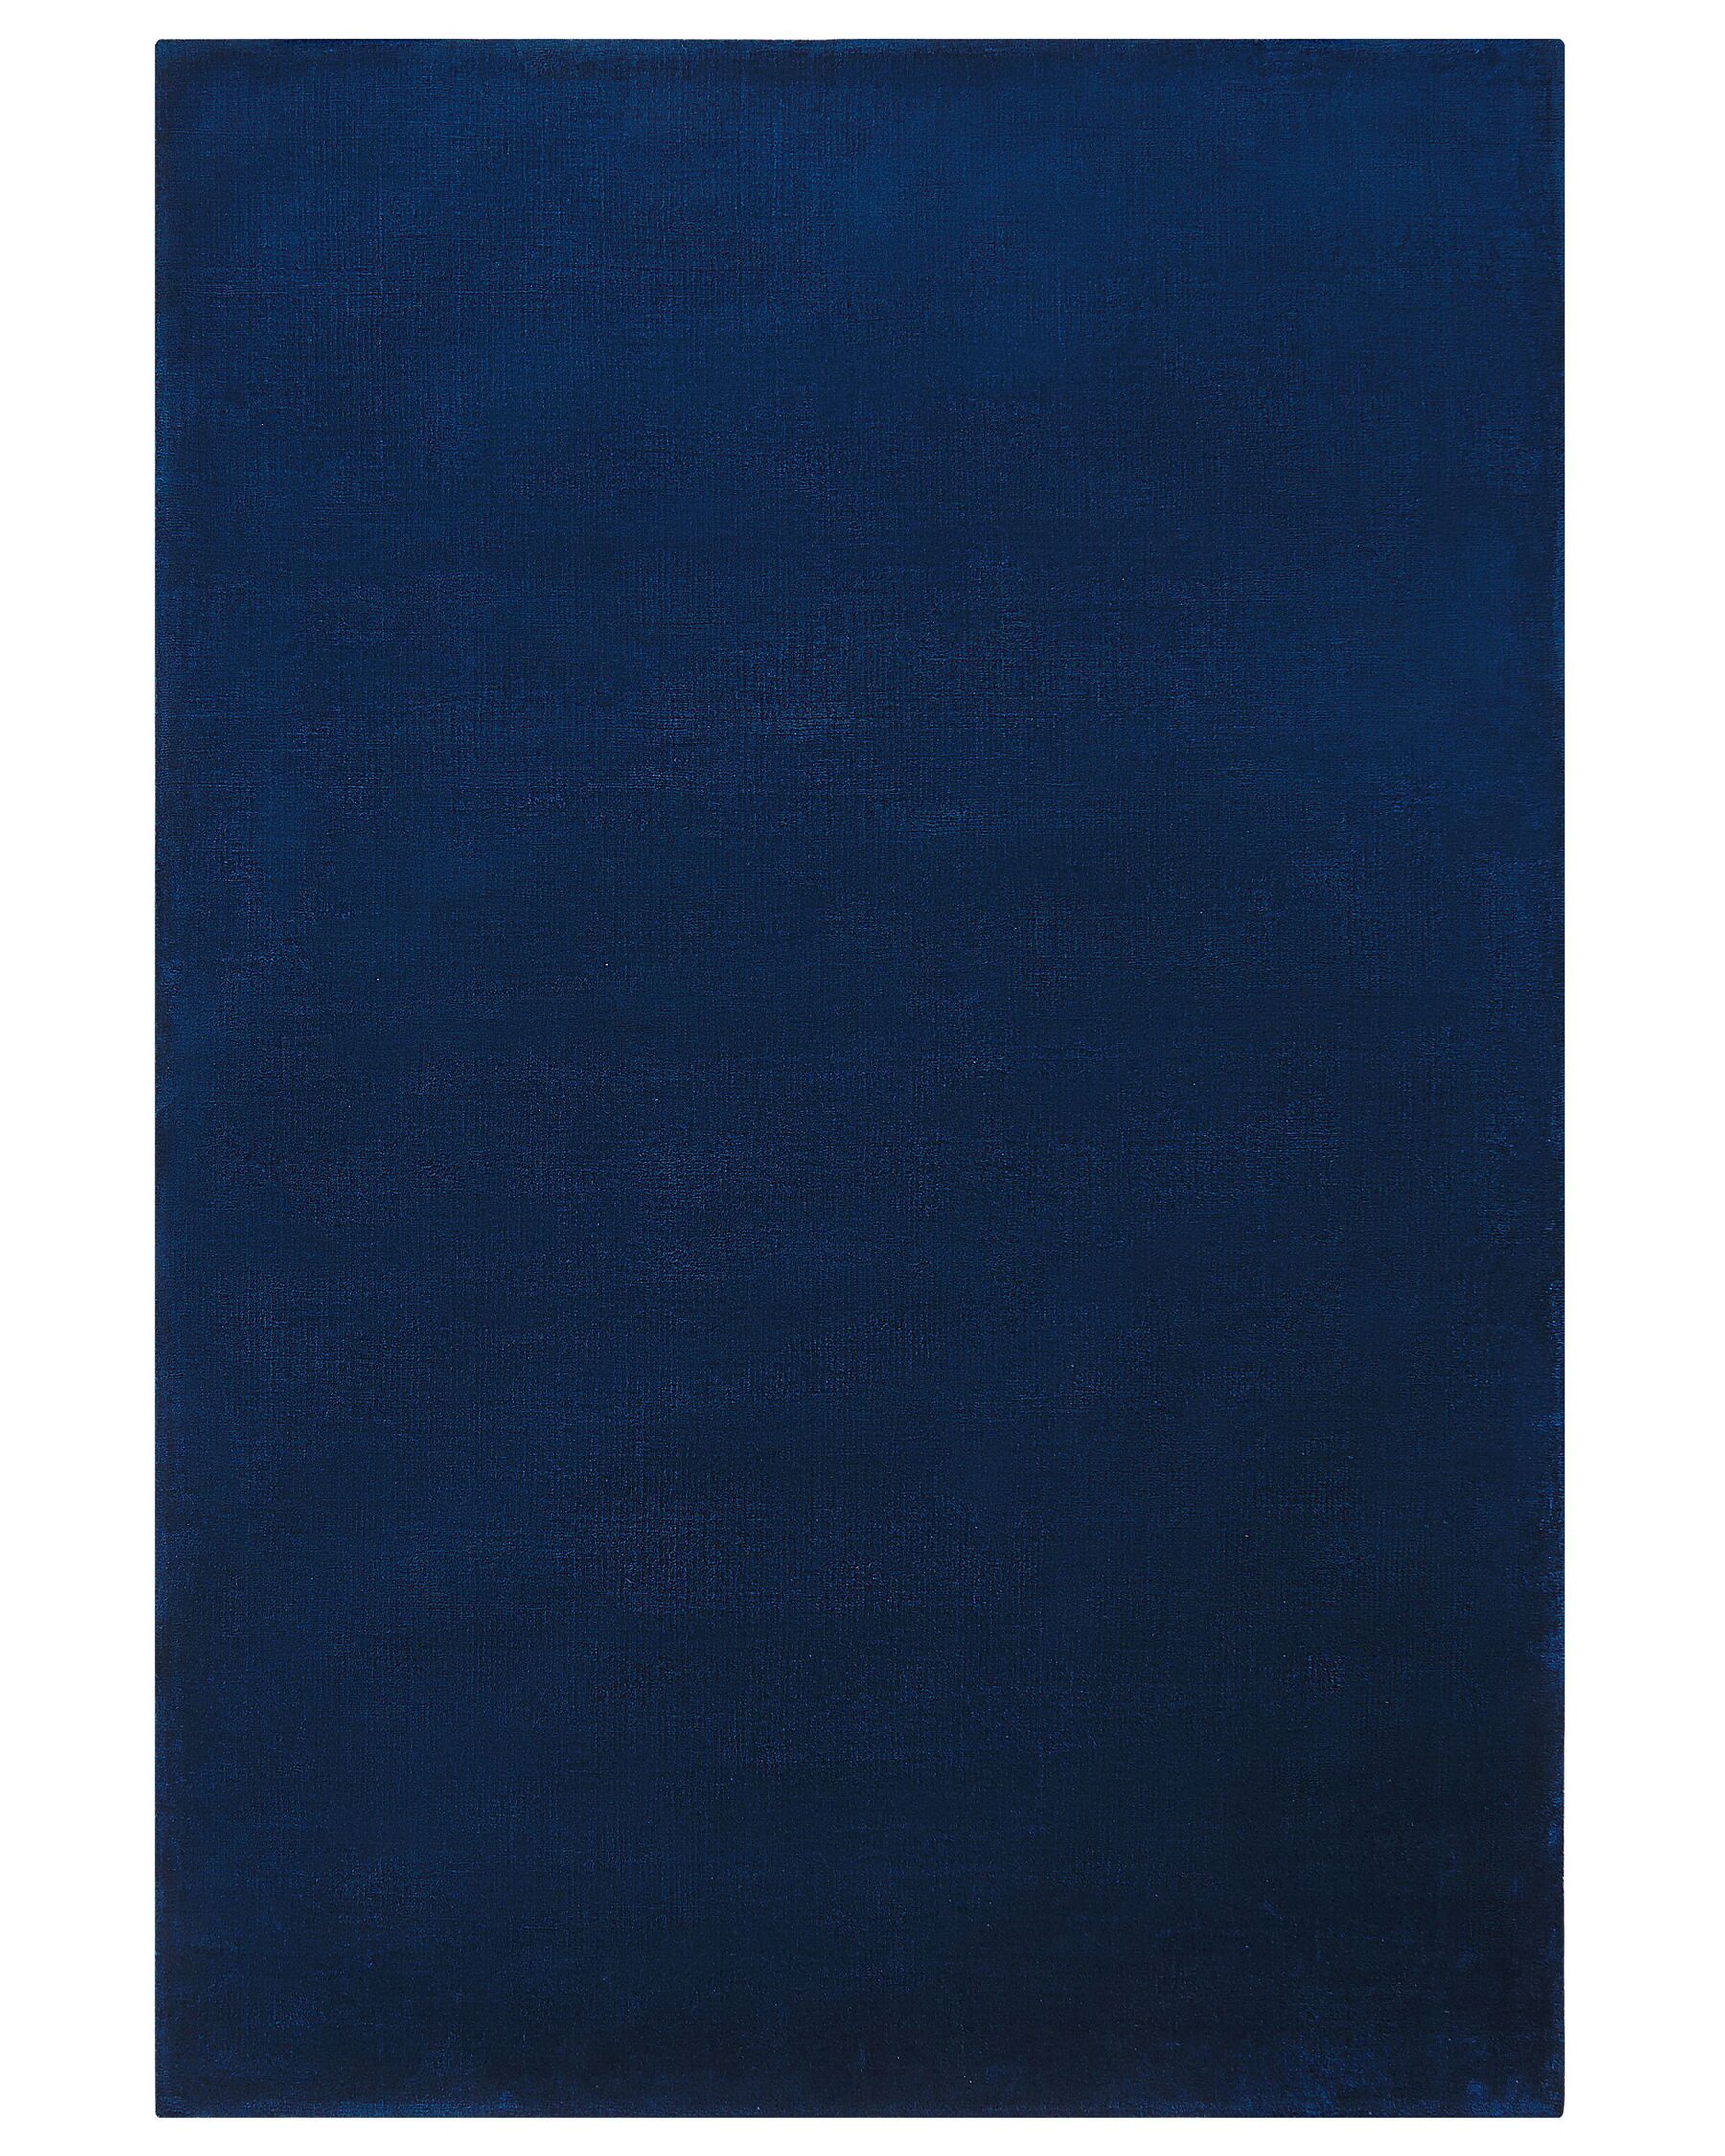 Vloerkleed viscose marineblauw 160 x 230 cm GESI II_793600